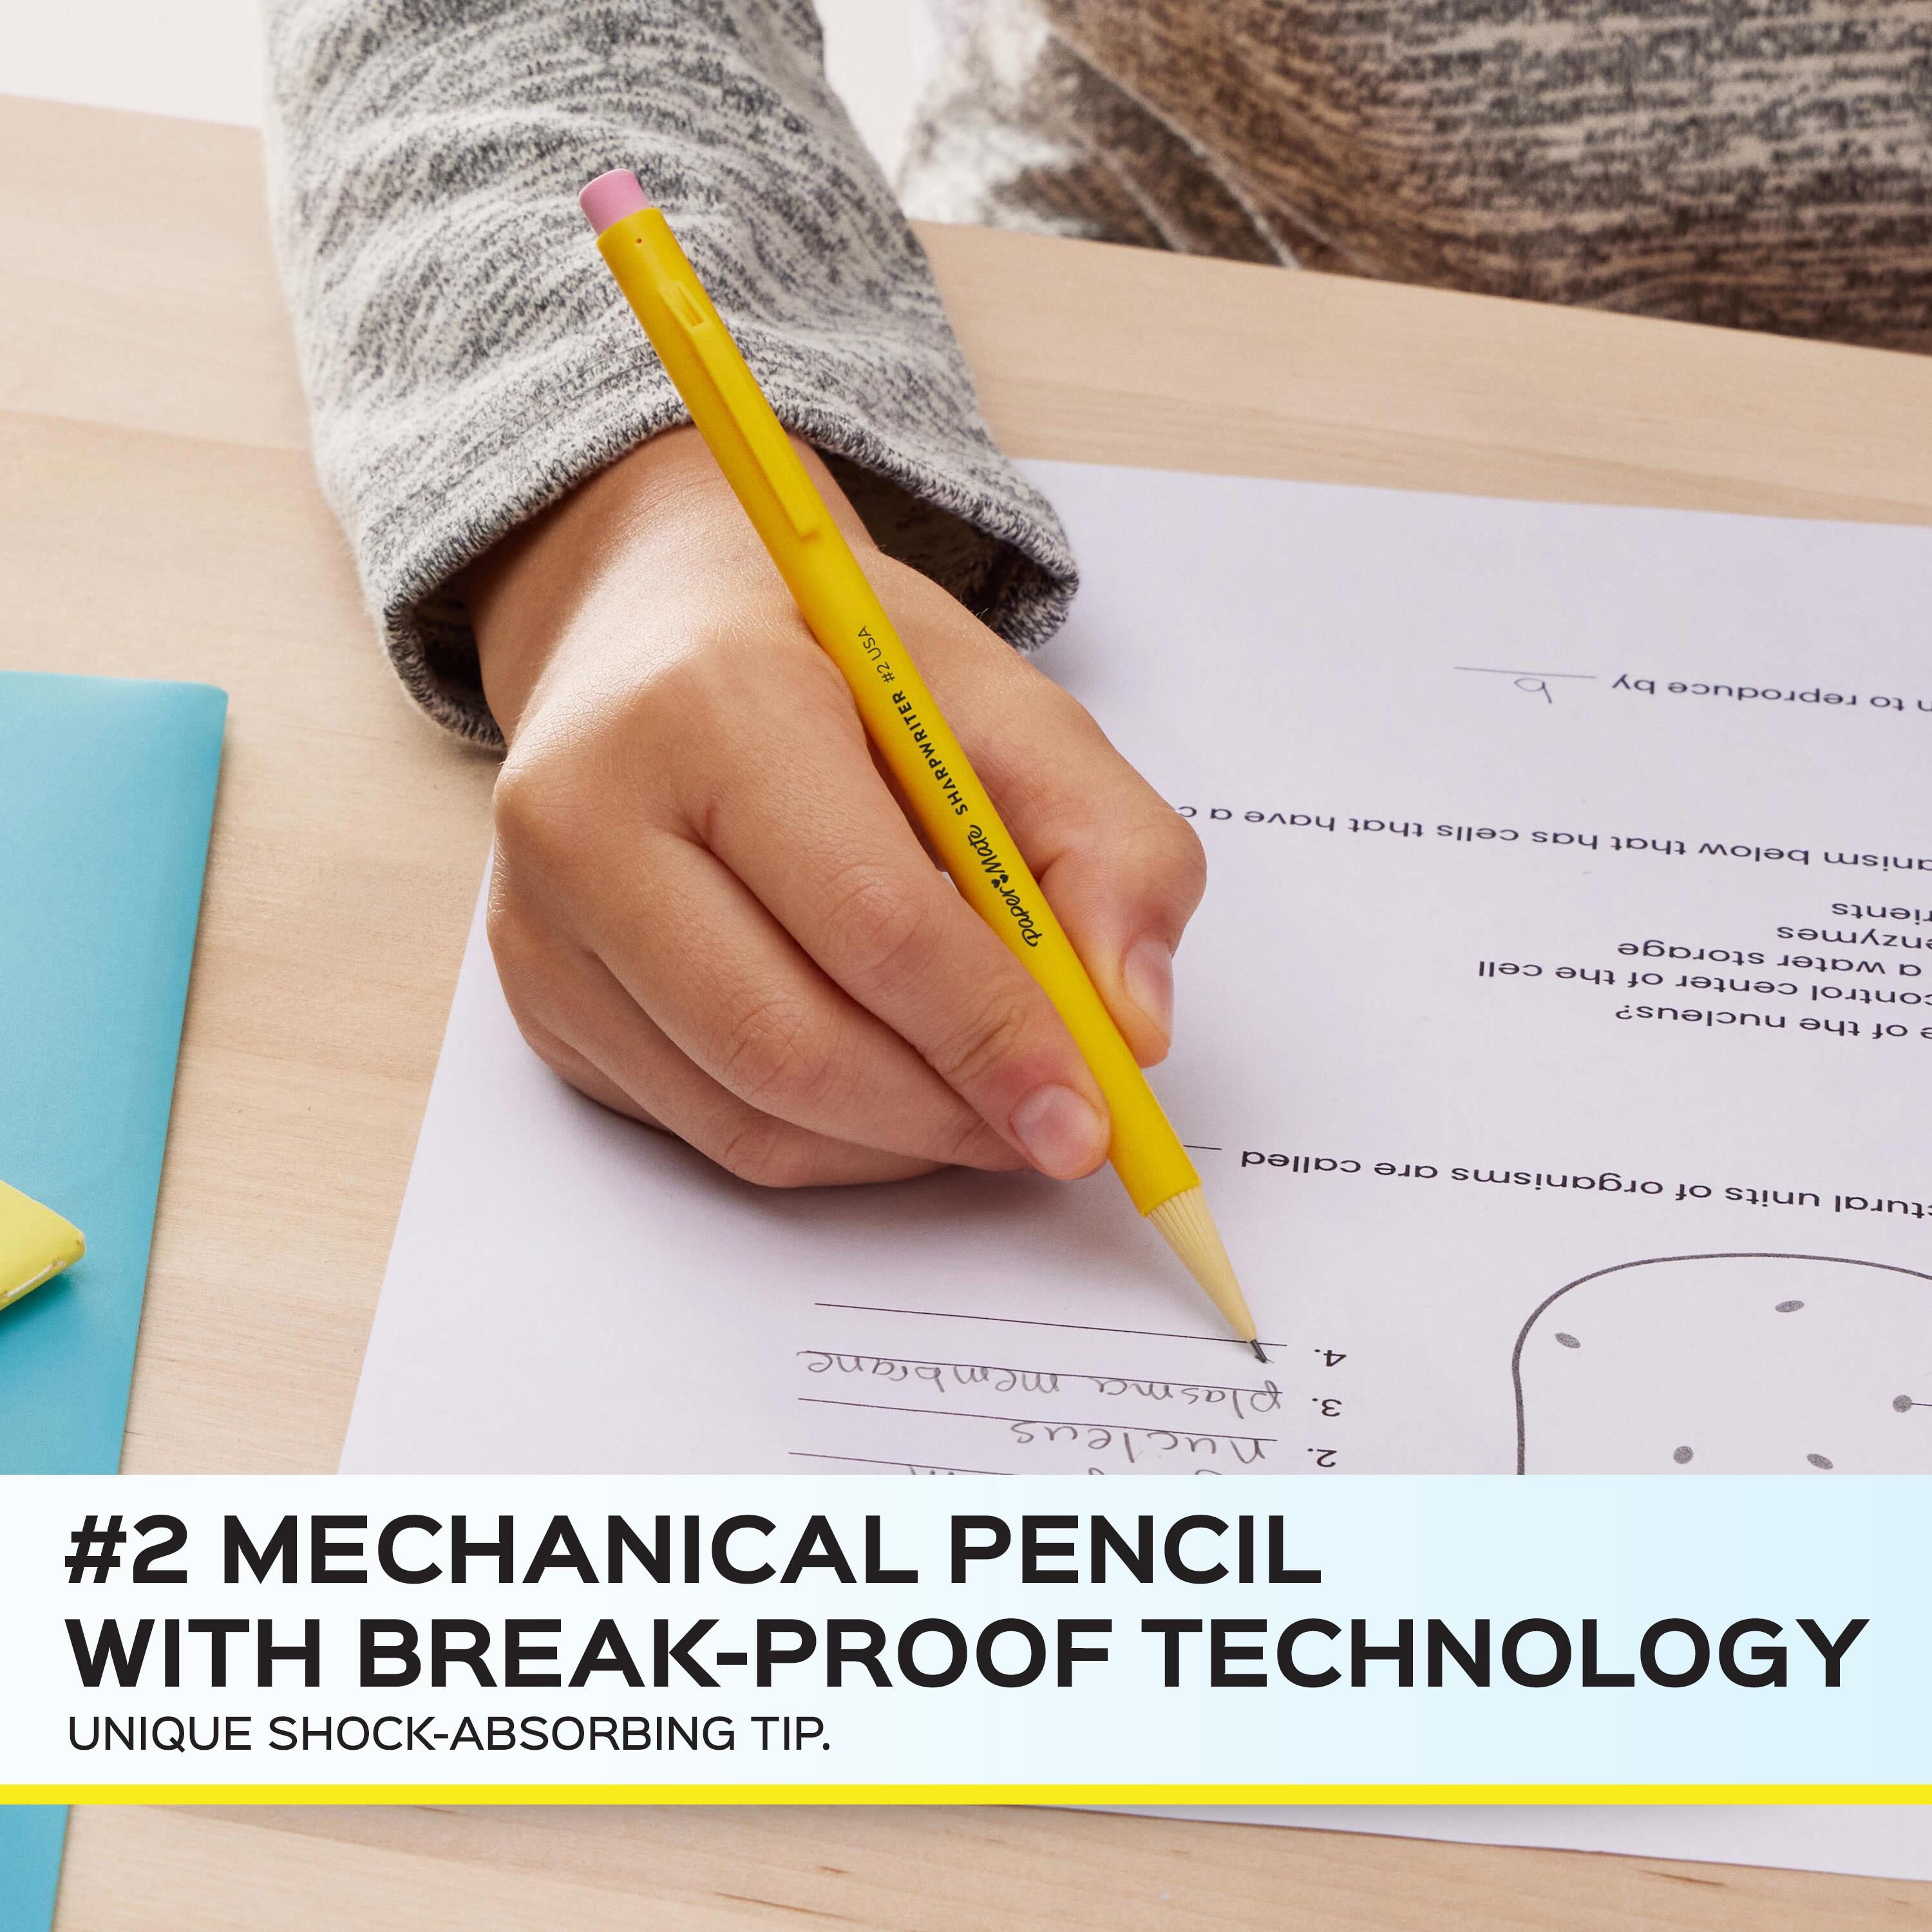 Fiskars Back To School Supplies Mess Less Pencil And Crayon